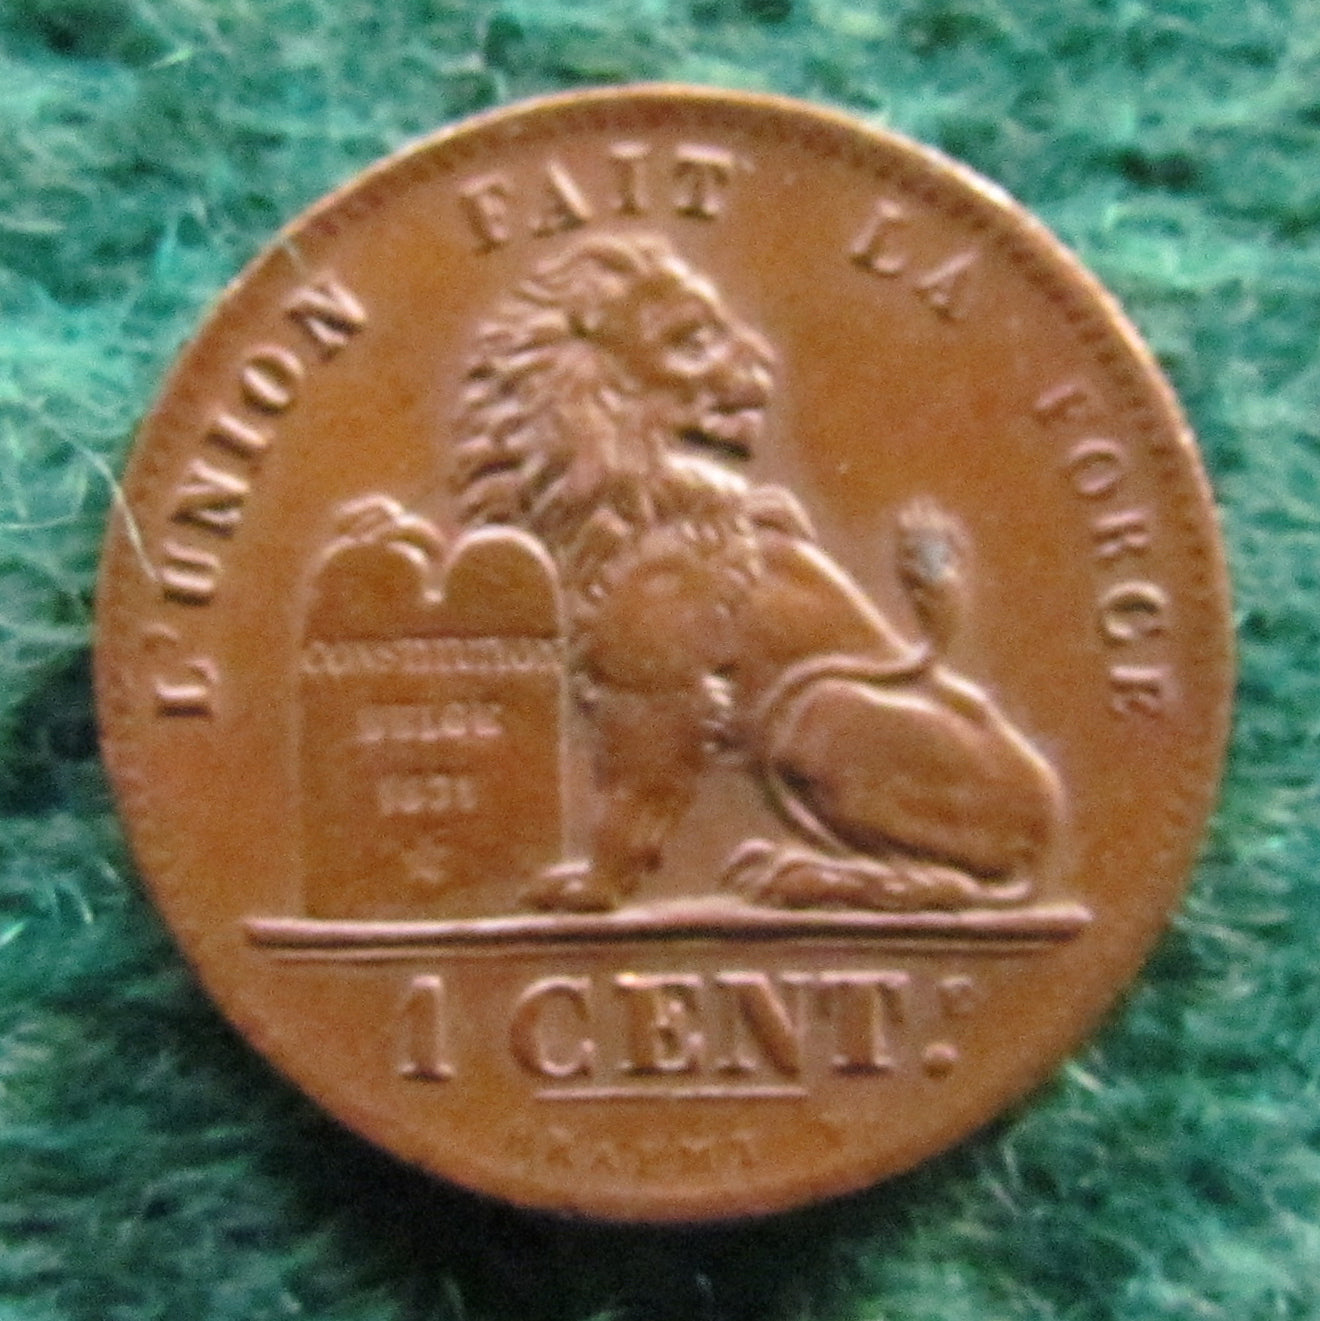 Belgium 1902 1 Centime Coin - Circulated